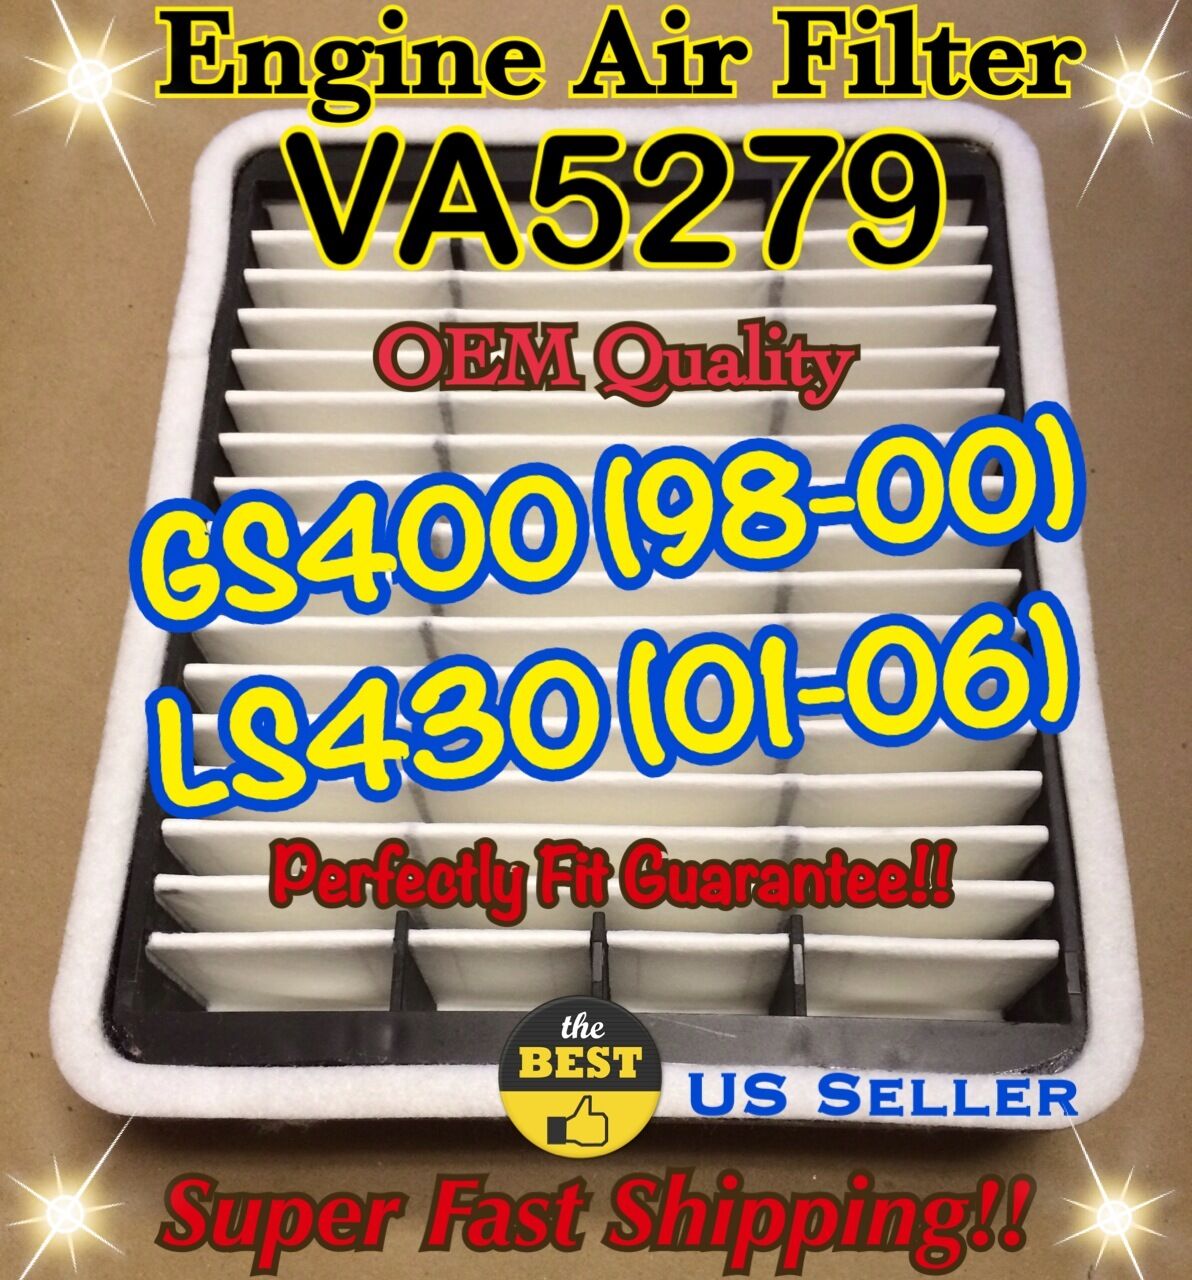 VA5279 GS400(98-00) LS430(01-06) OEM Quality Air Filters Perfect Fit & Fast Ship